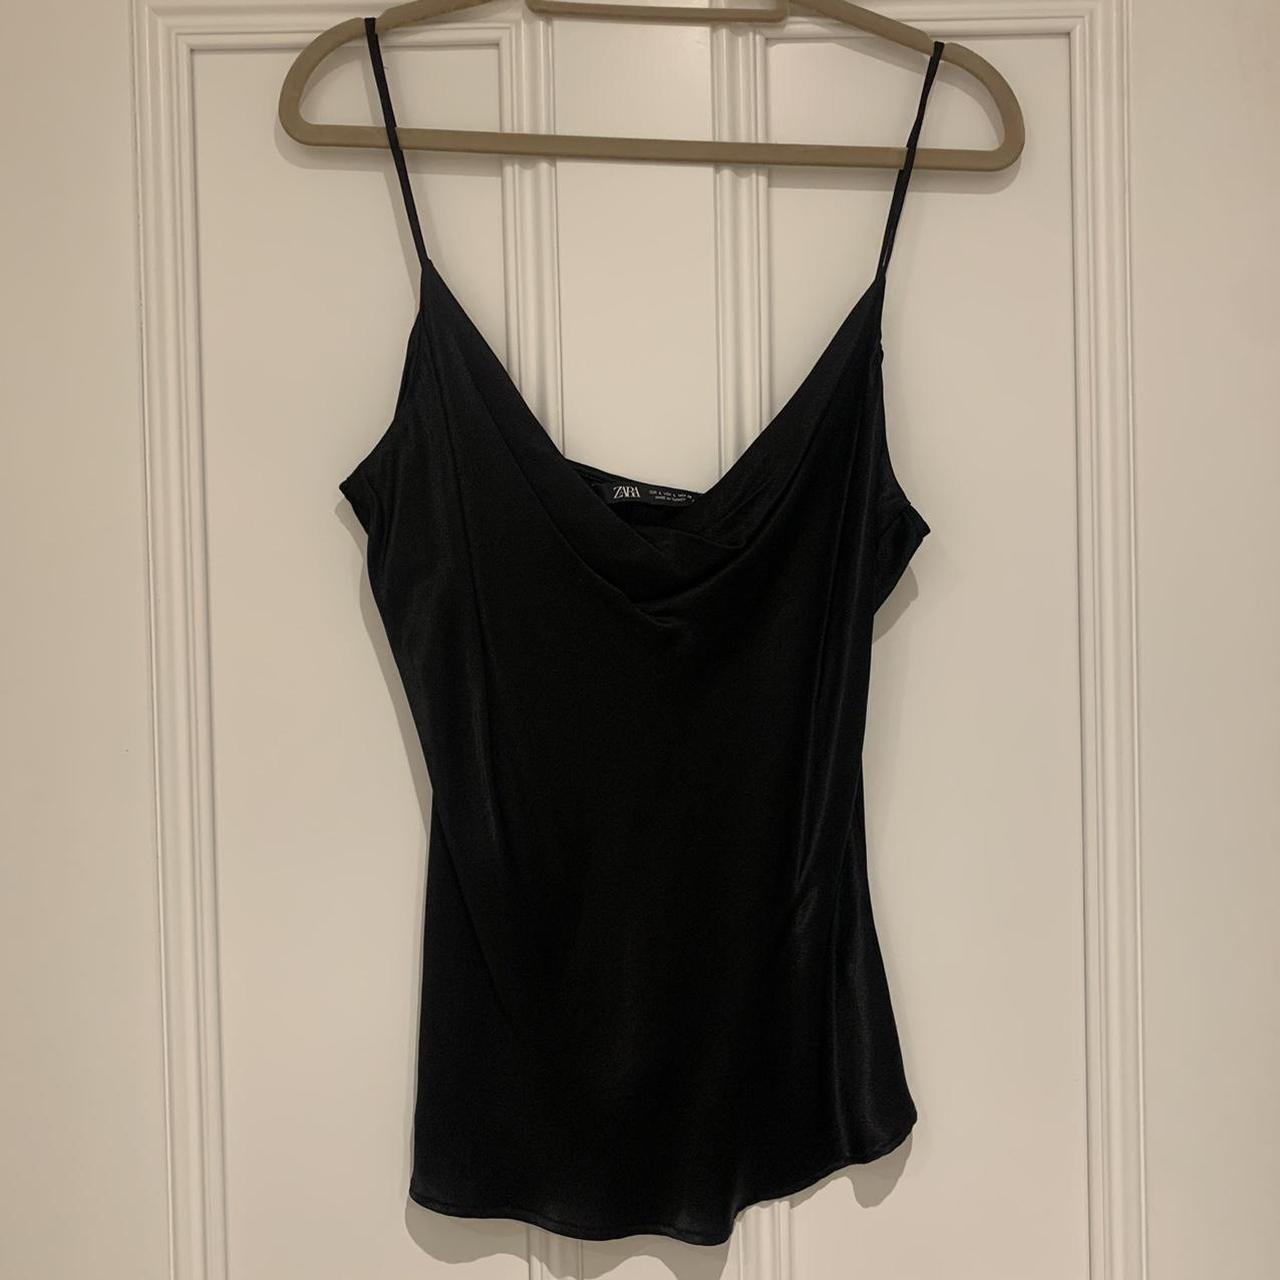 Zara black silky cami top size large. Brand new with... - Depop